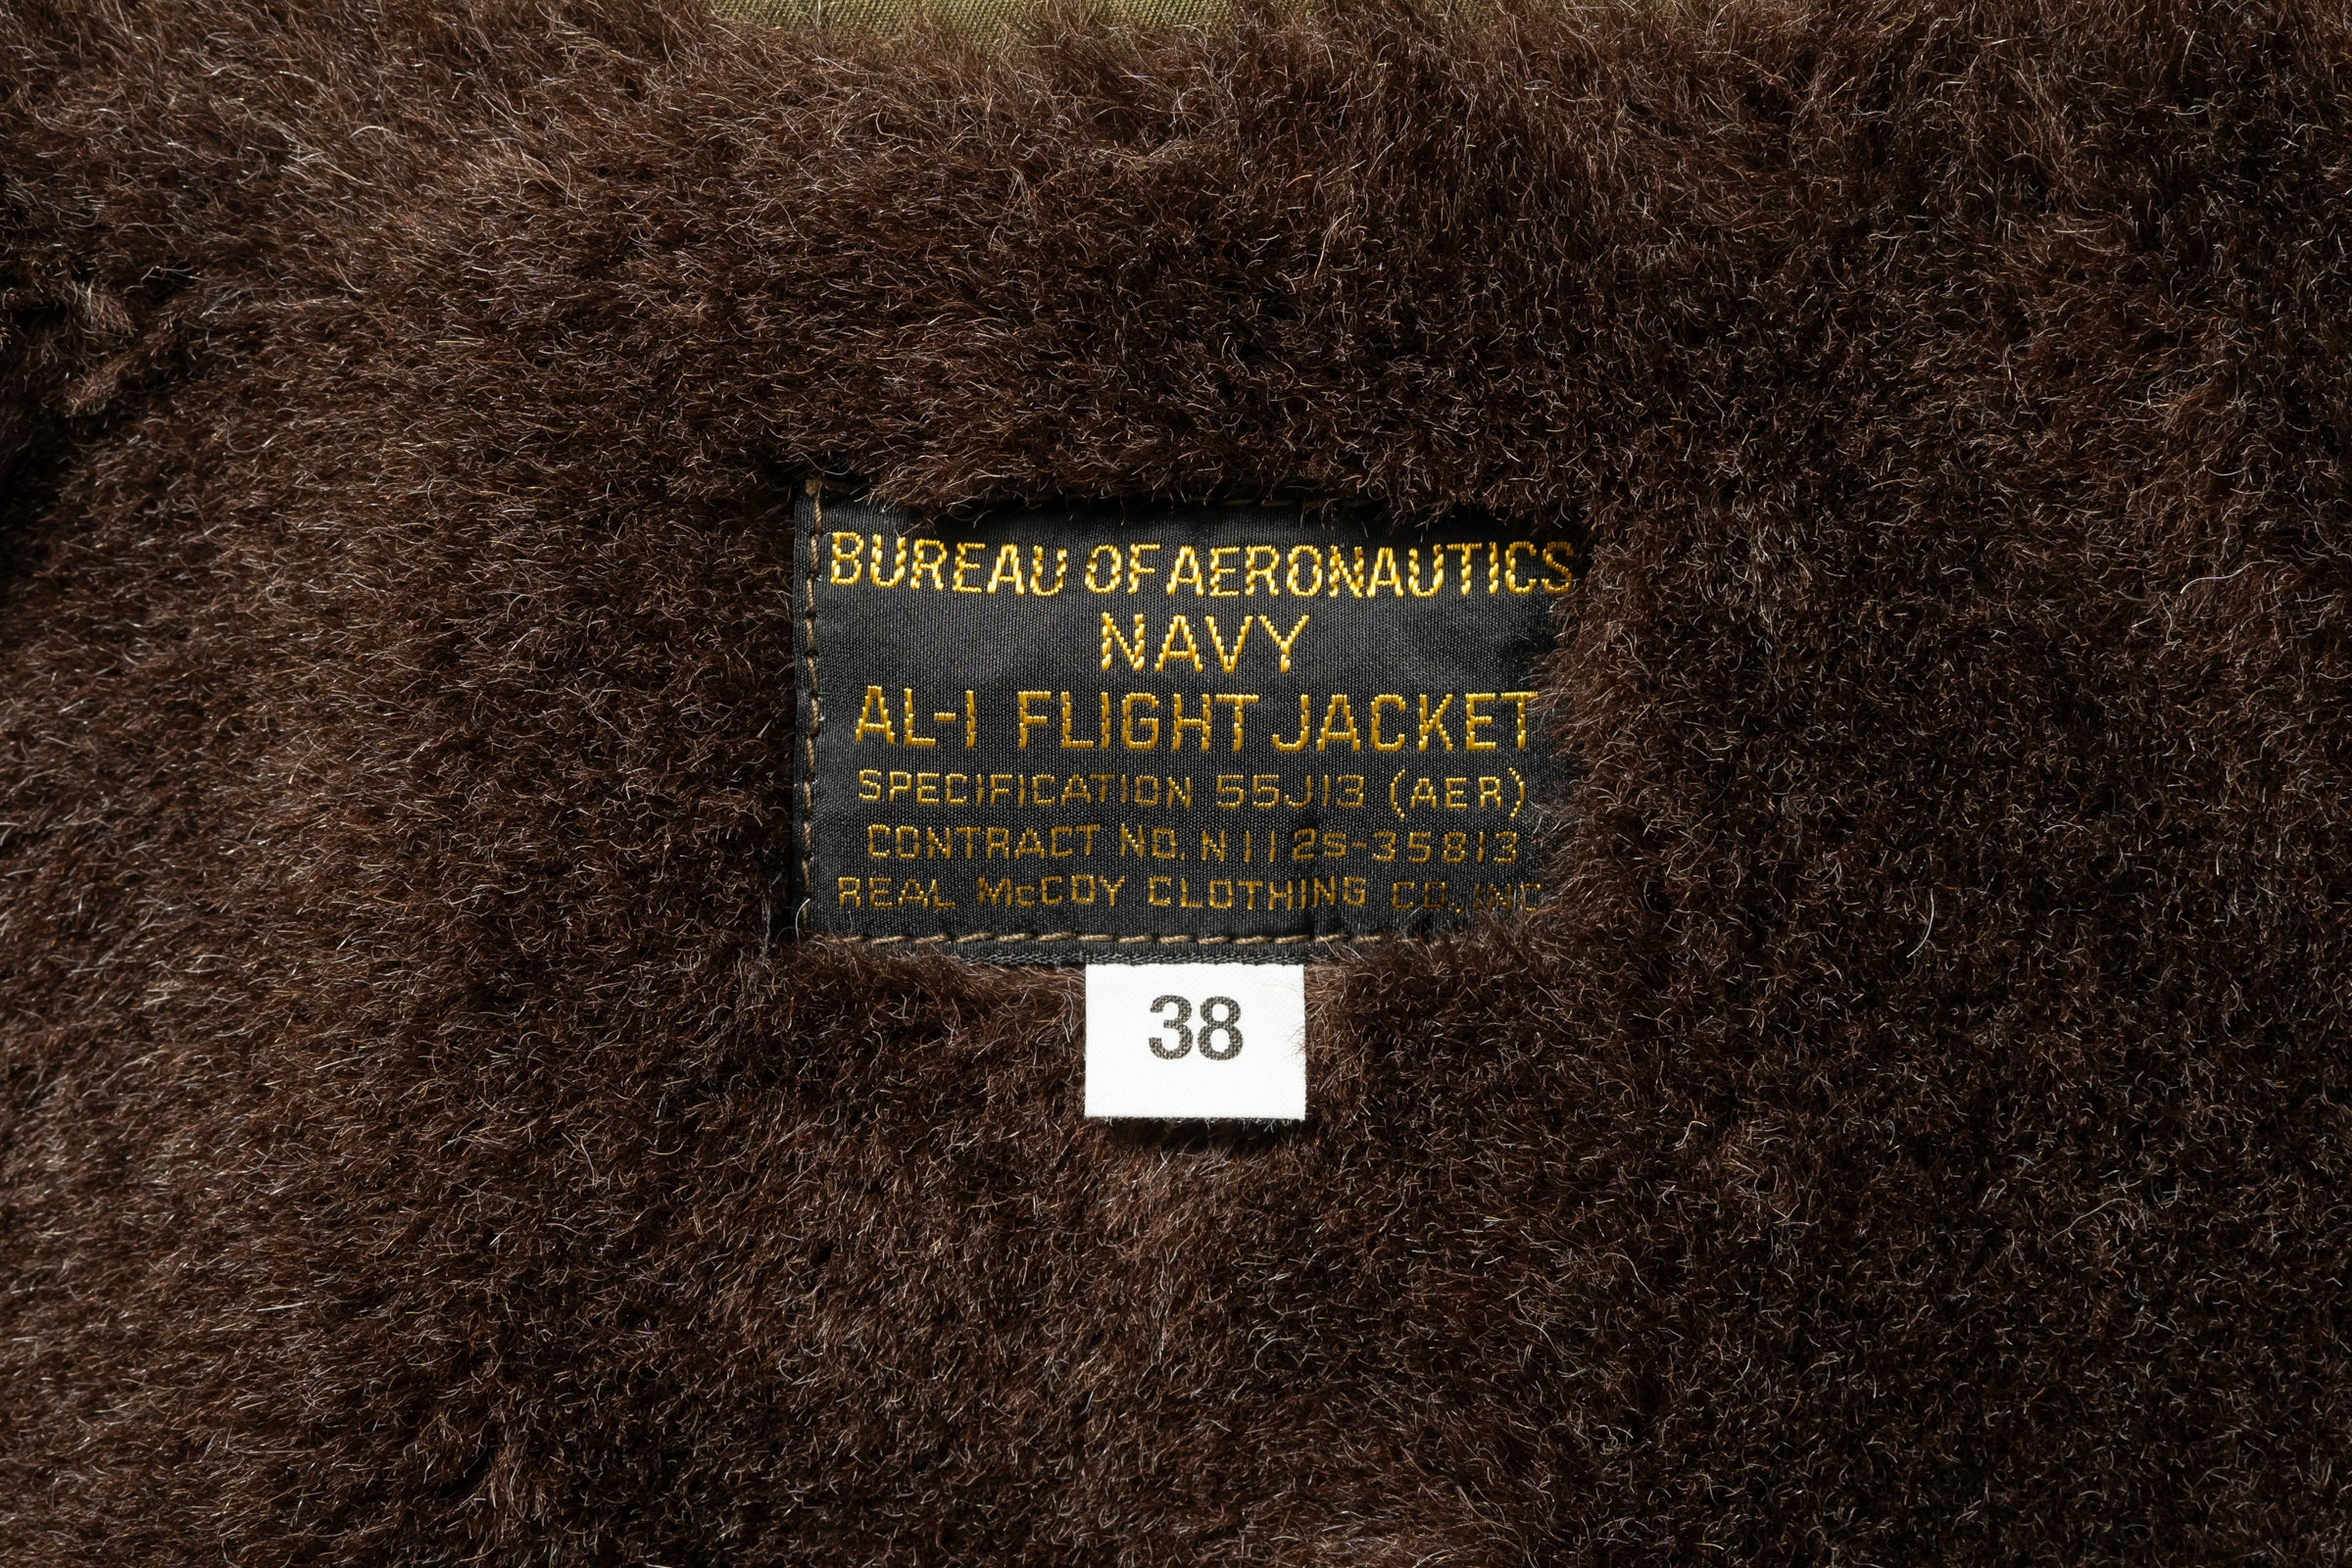 USN AL-1 FLIGHT JACKET – The Real McCoy's